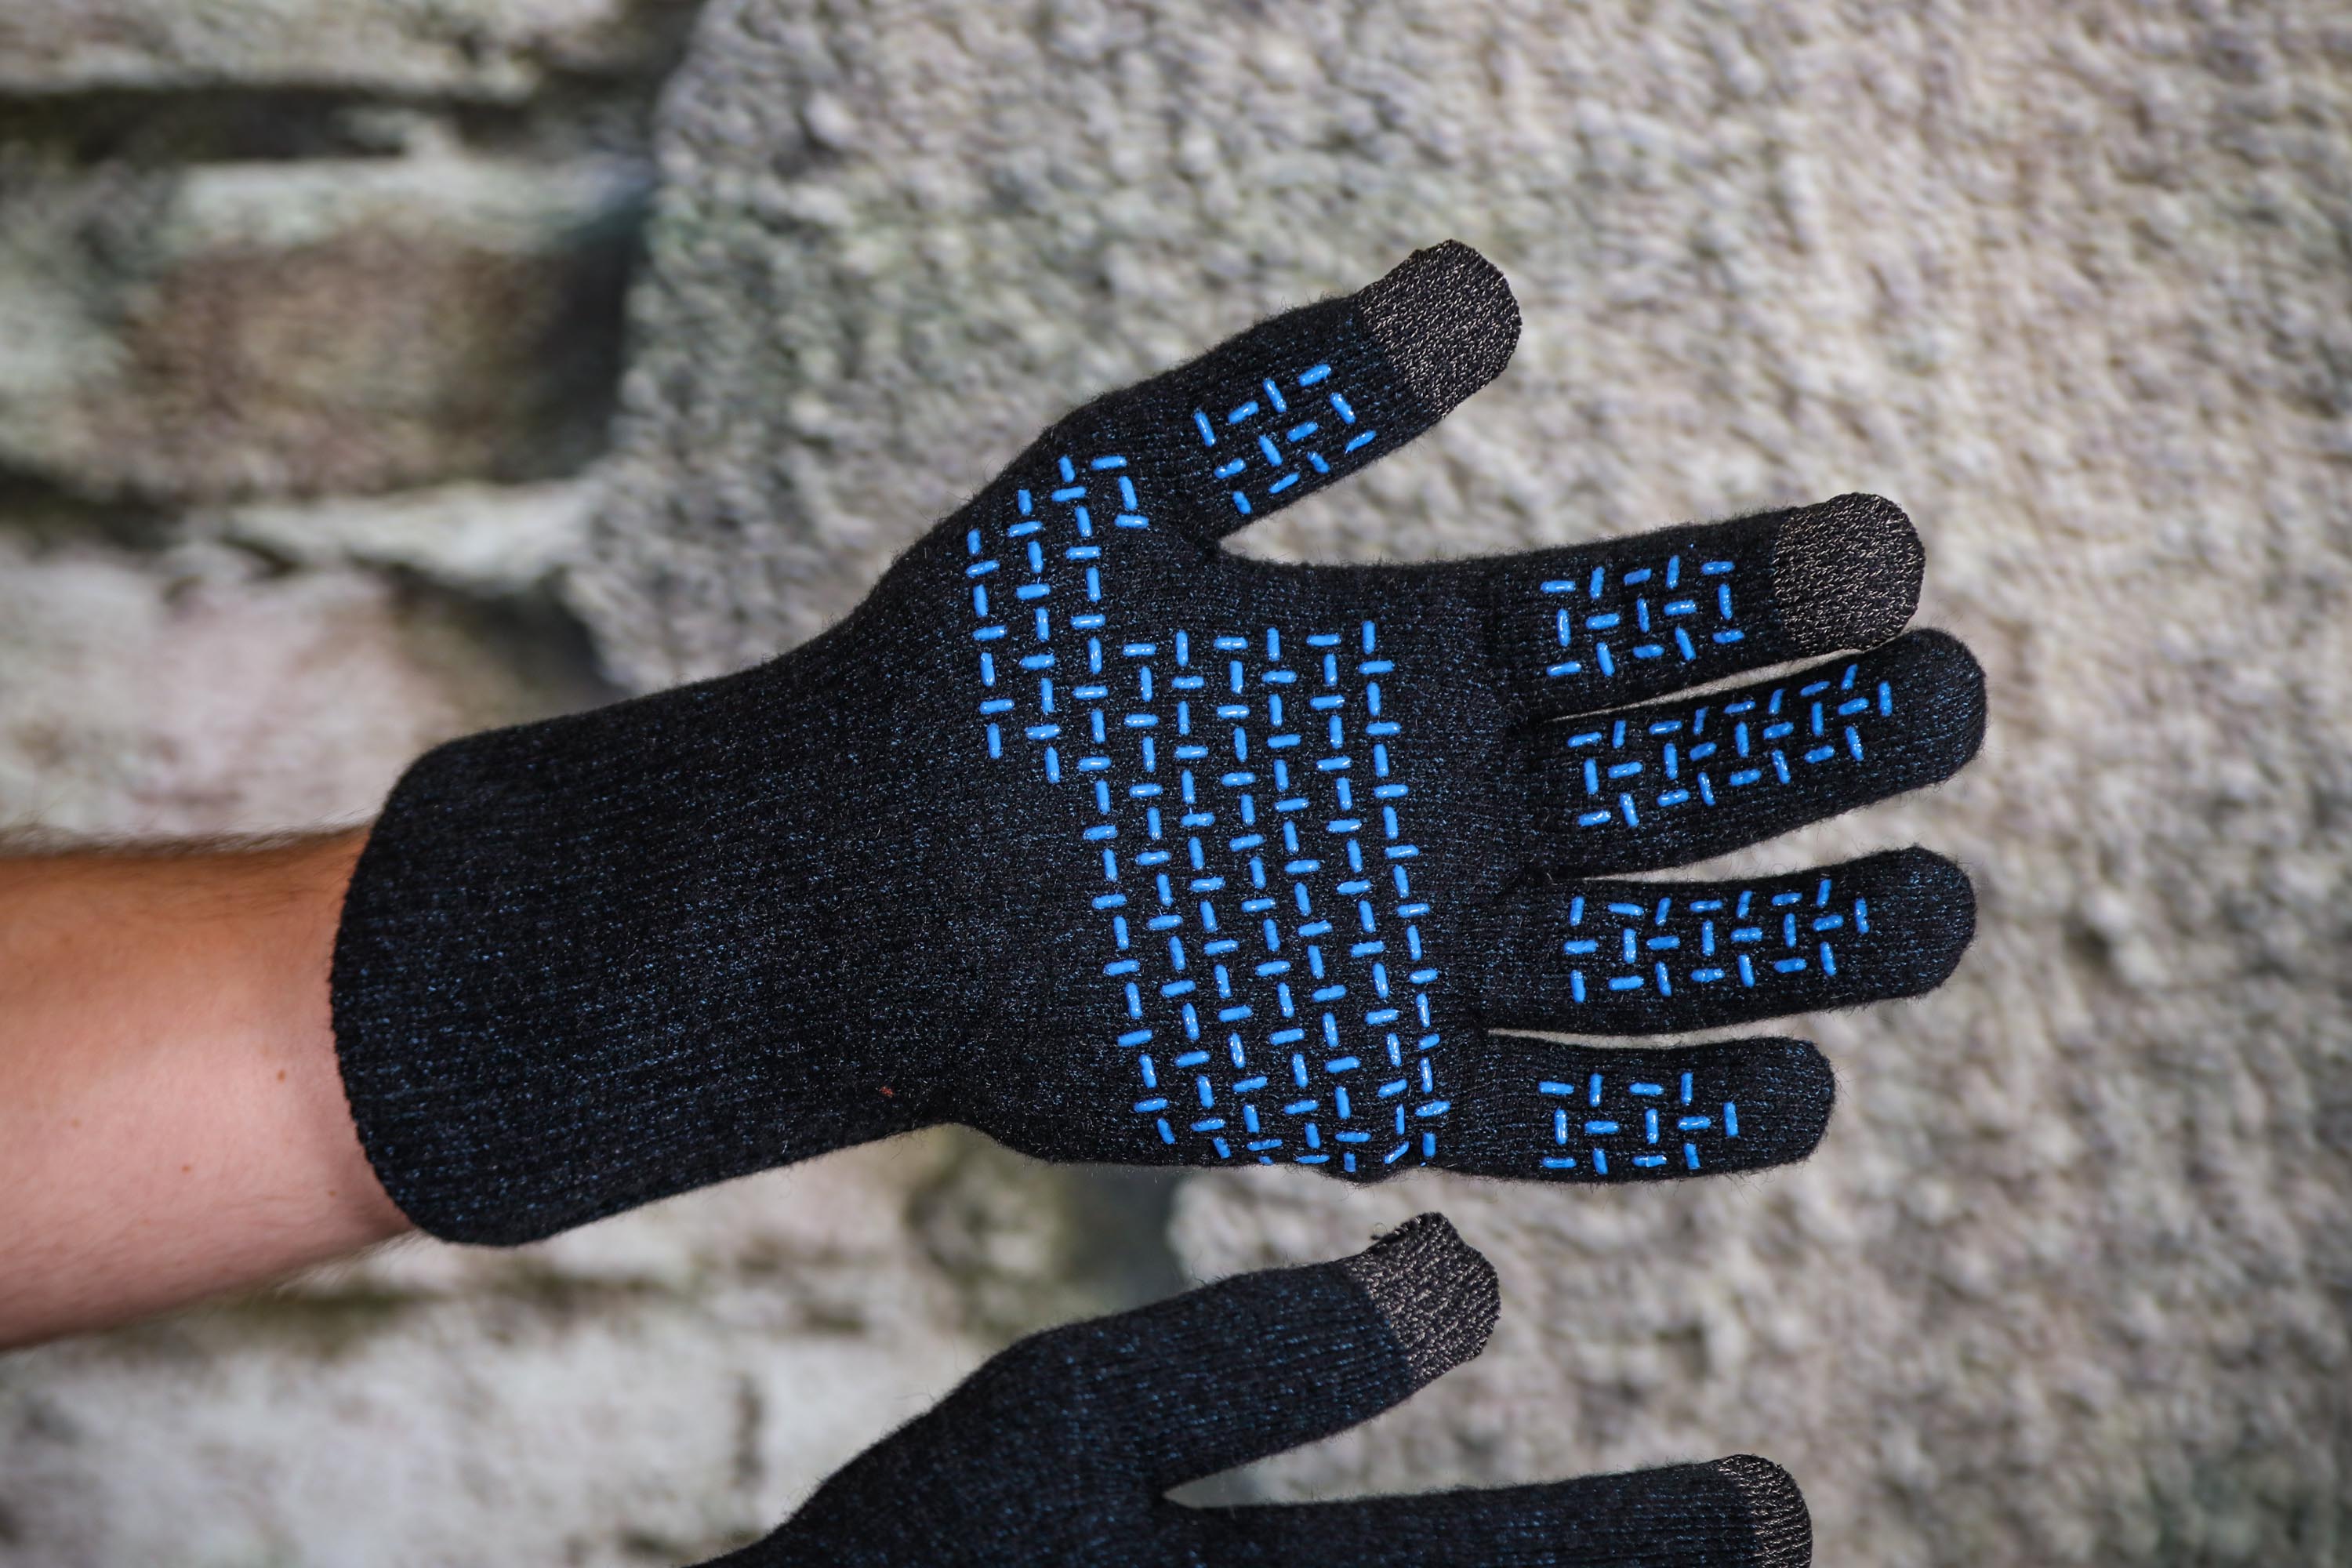 various colors DexShell TouchFit waterproof gloves w/ CoolMax lining